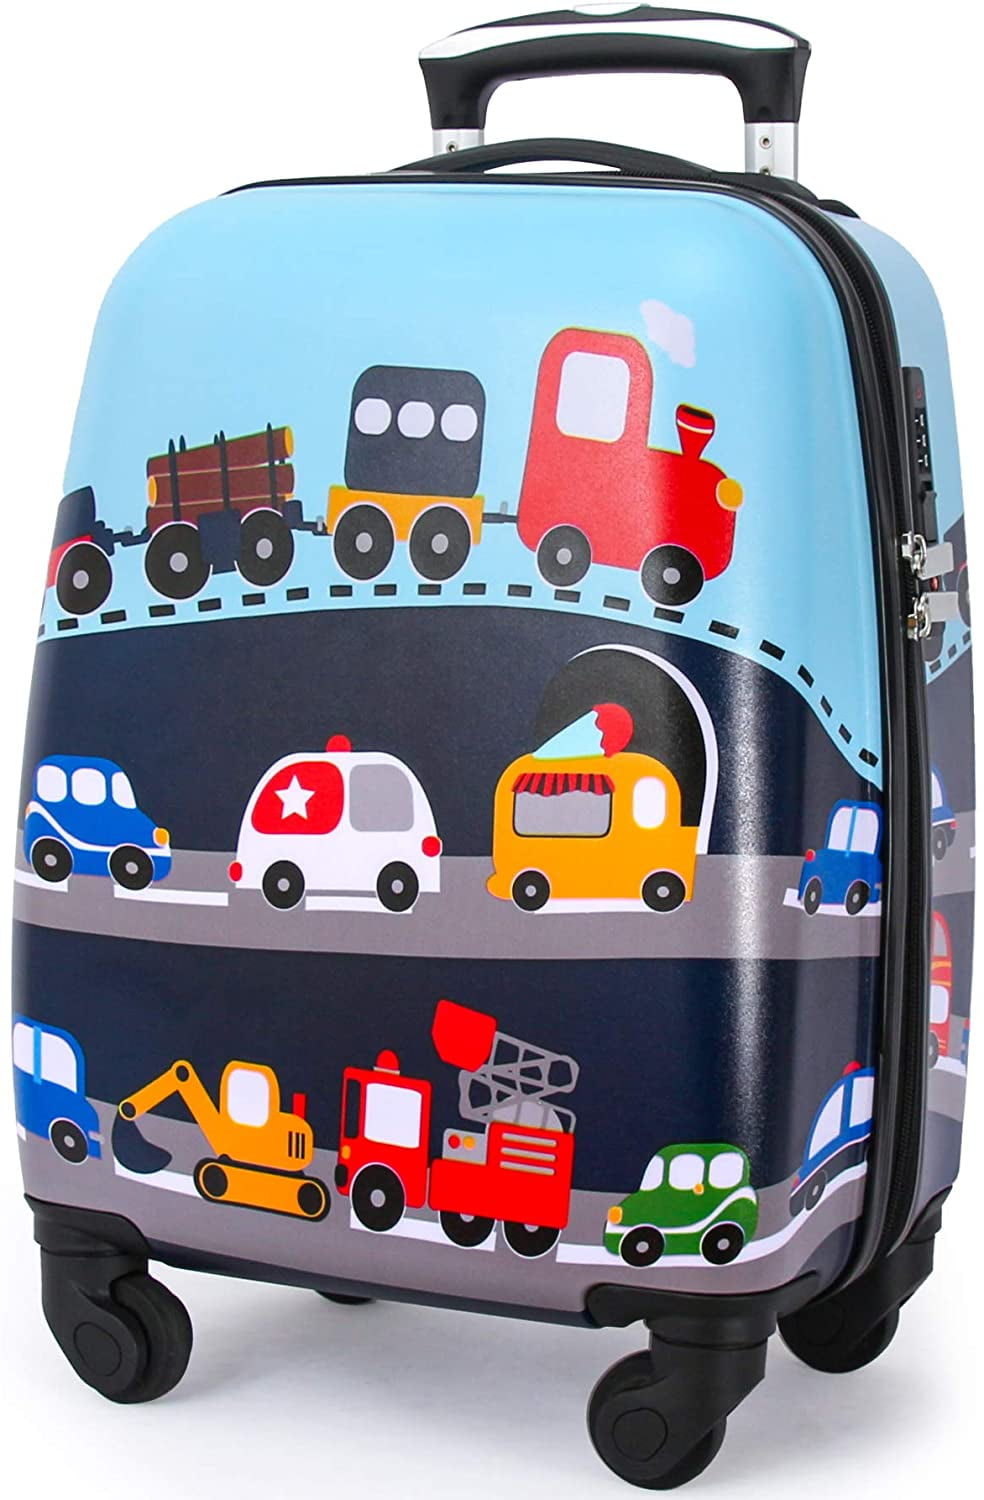 GURHODVO Kids Luggage Rolling Kids' Suitcase with Wheels Hard